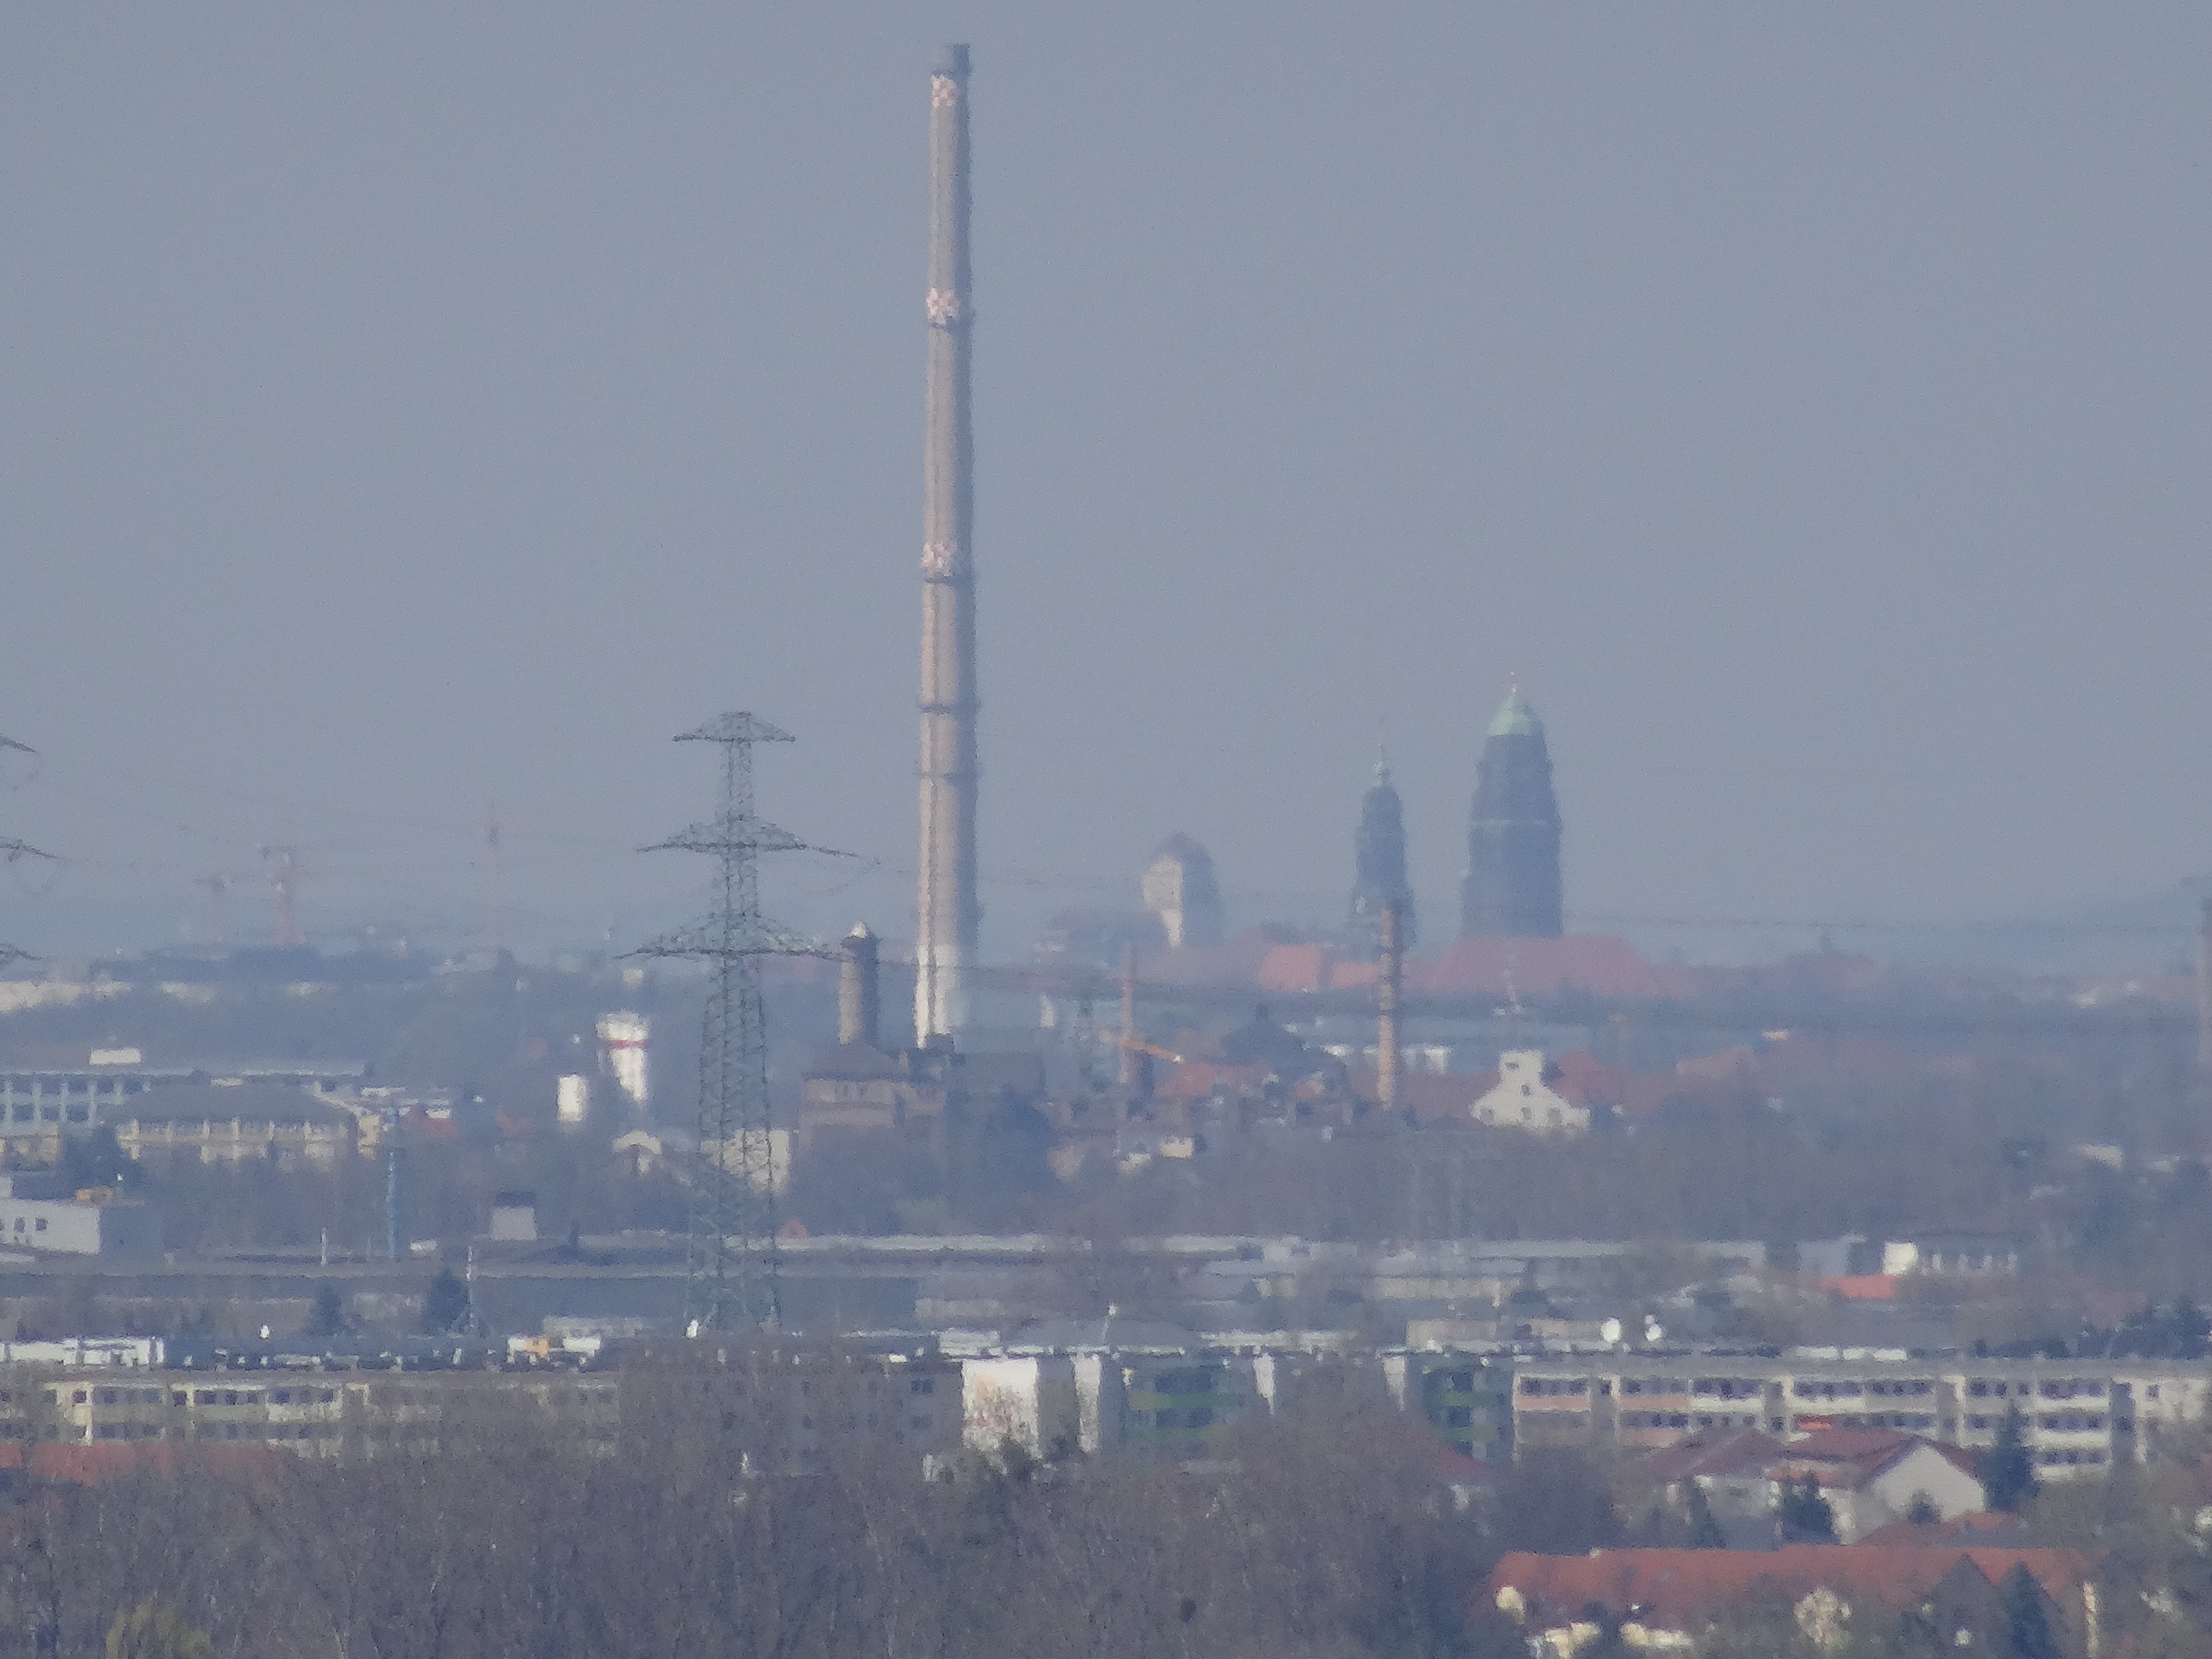 View from kohlberg towards dresden photo